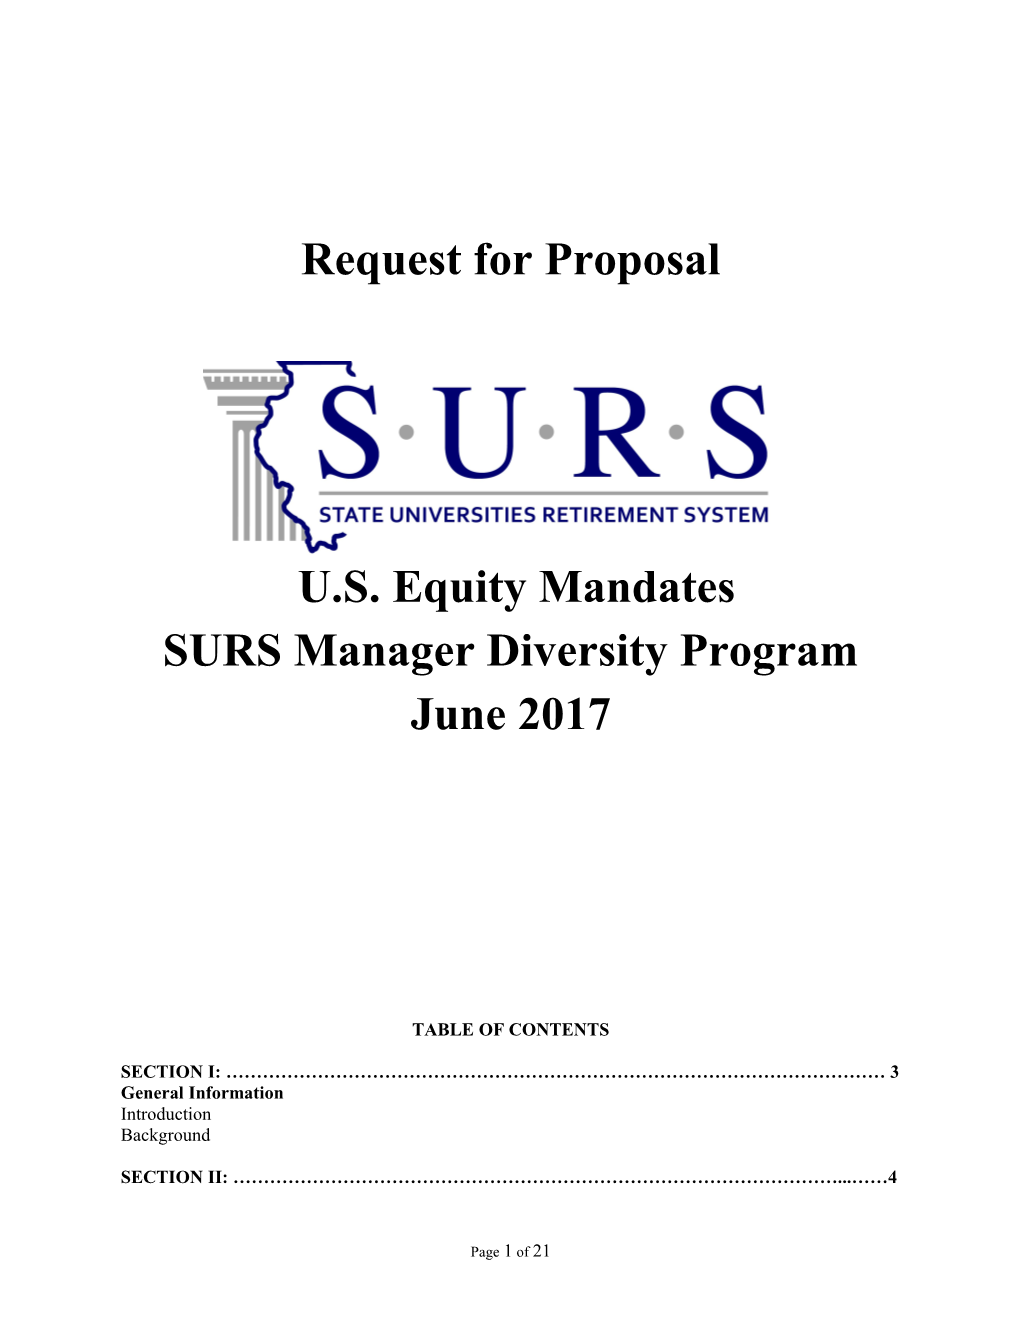 SURS Manager Diversity Program